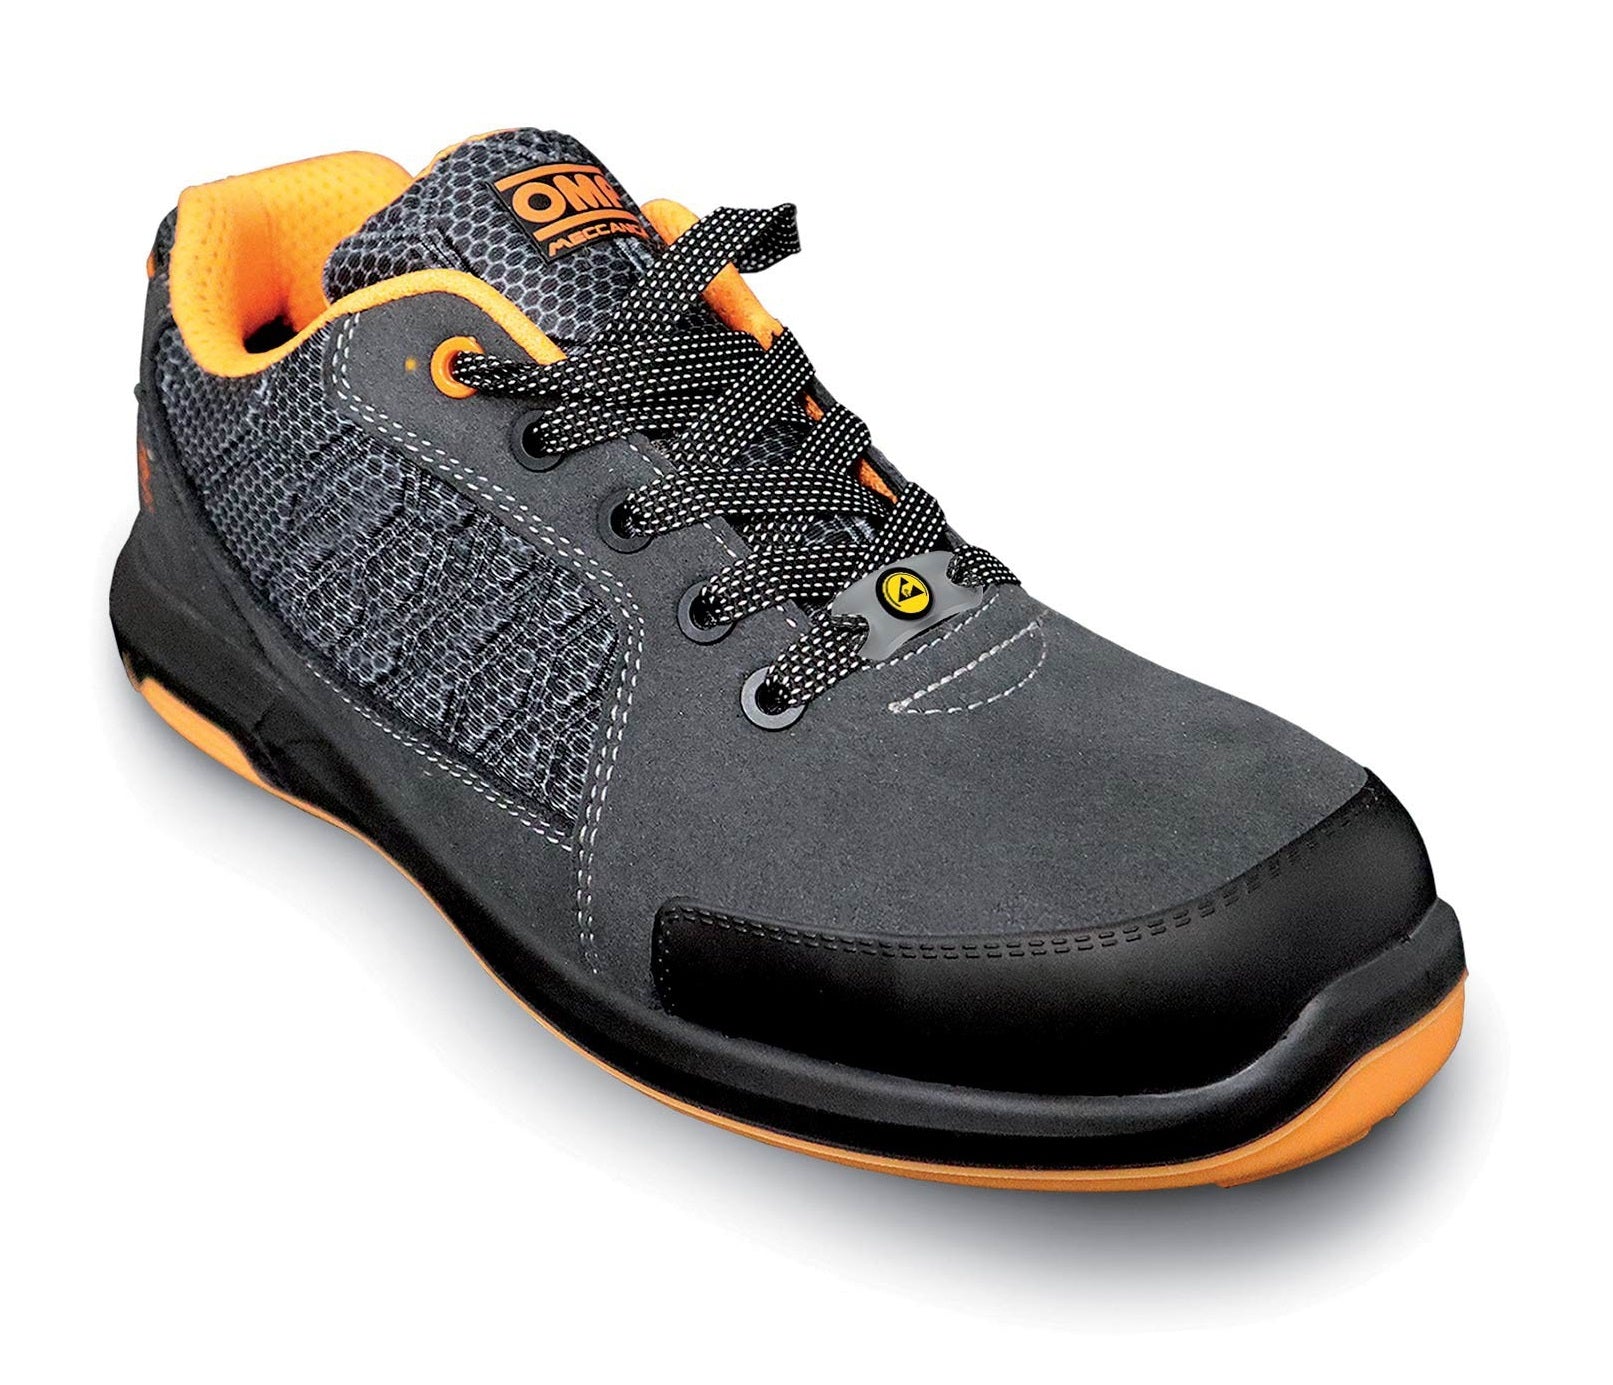 OMP OMPS90013920 Pro Sport Safety Mechanic's shoes, black/orange, size 39 Photo-0 